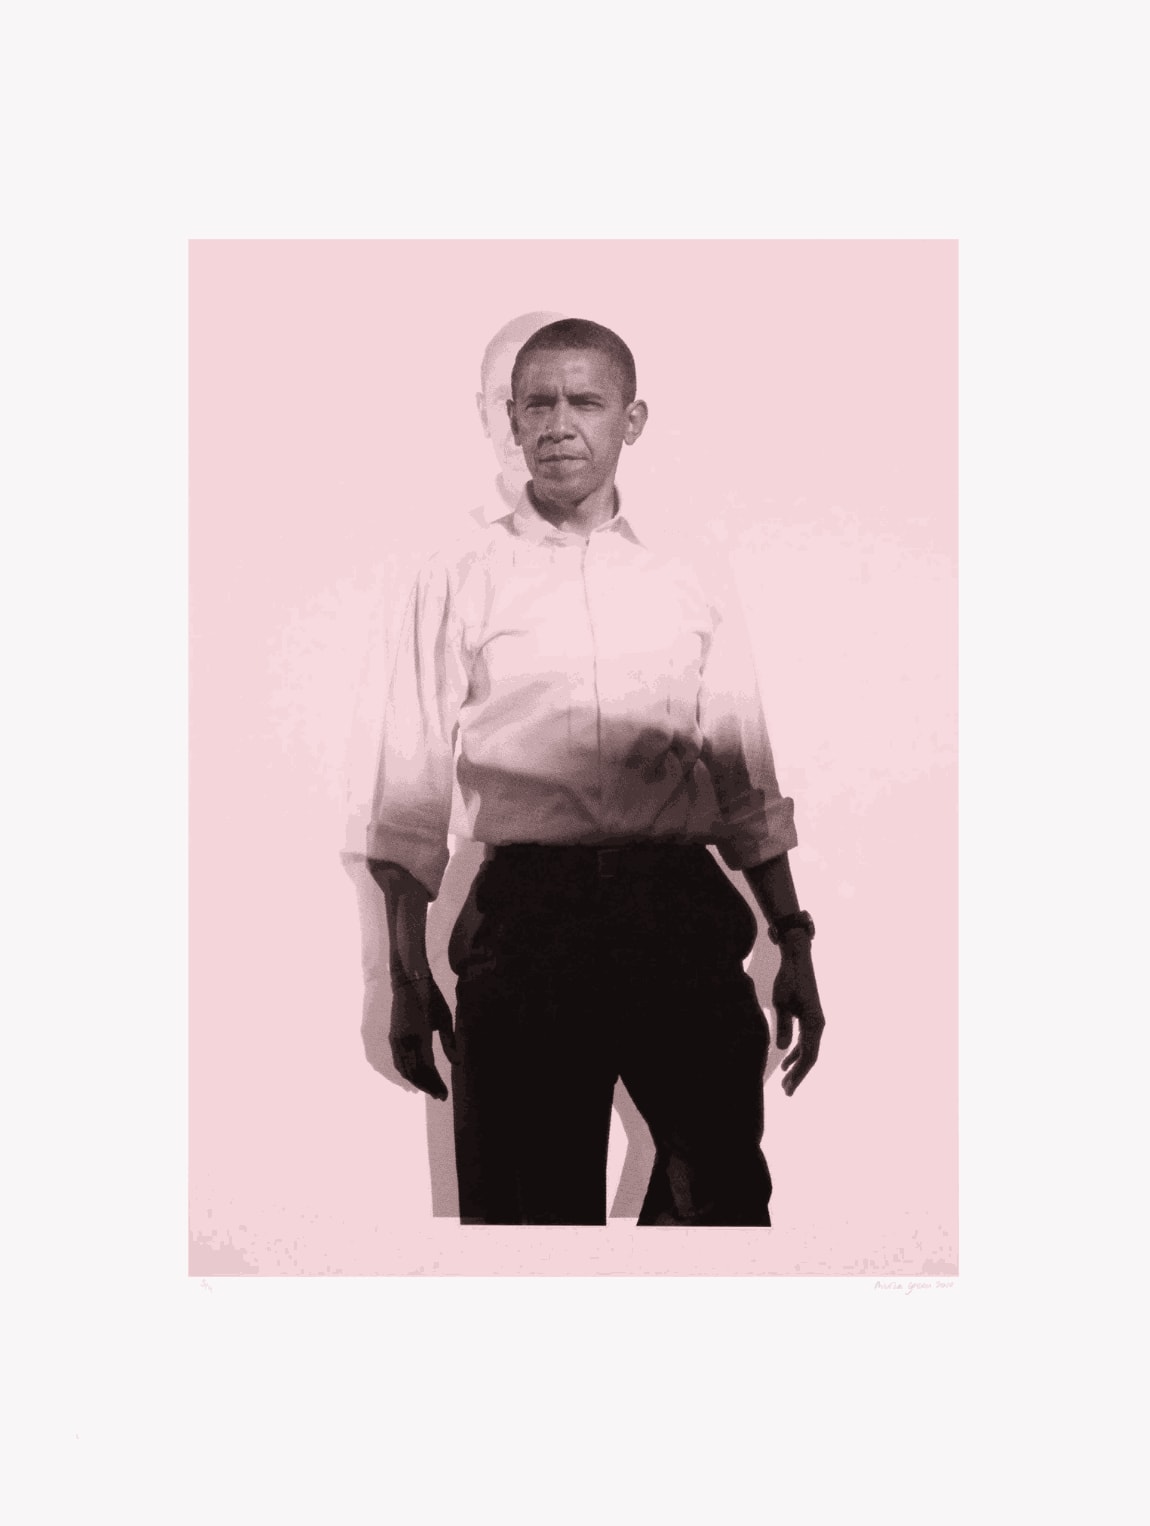 Nicola Green, Obama, Pink, 2010